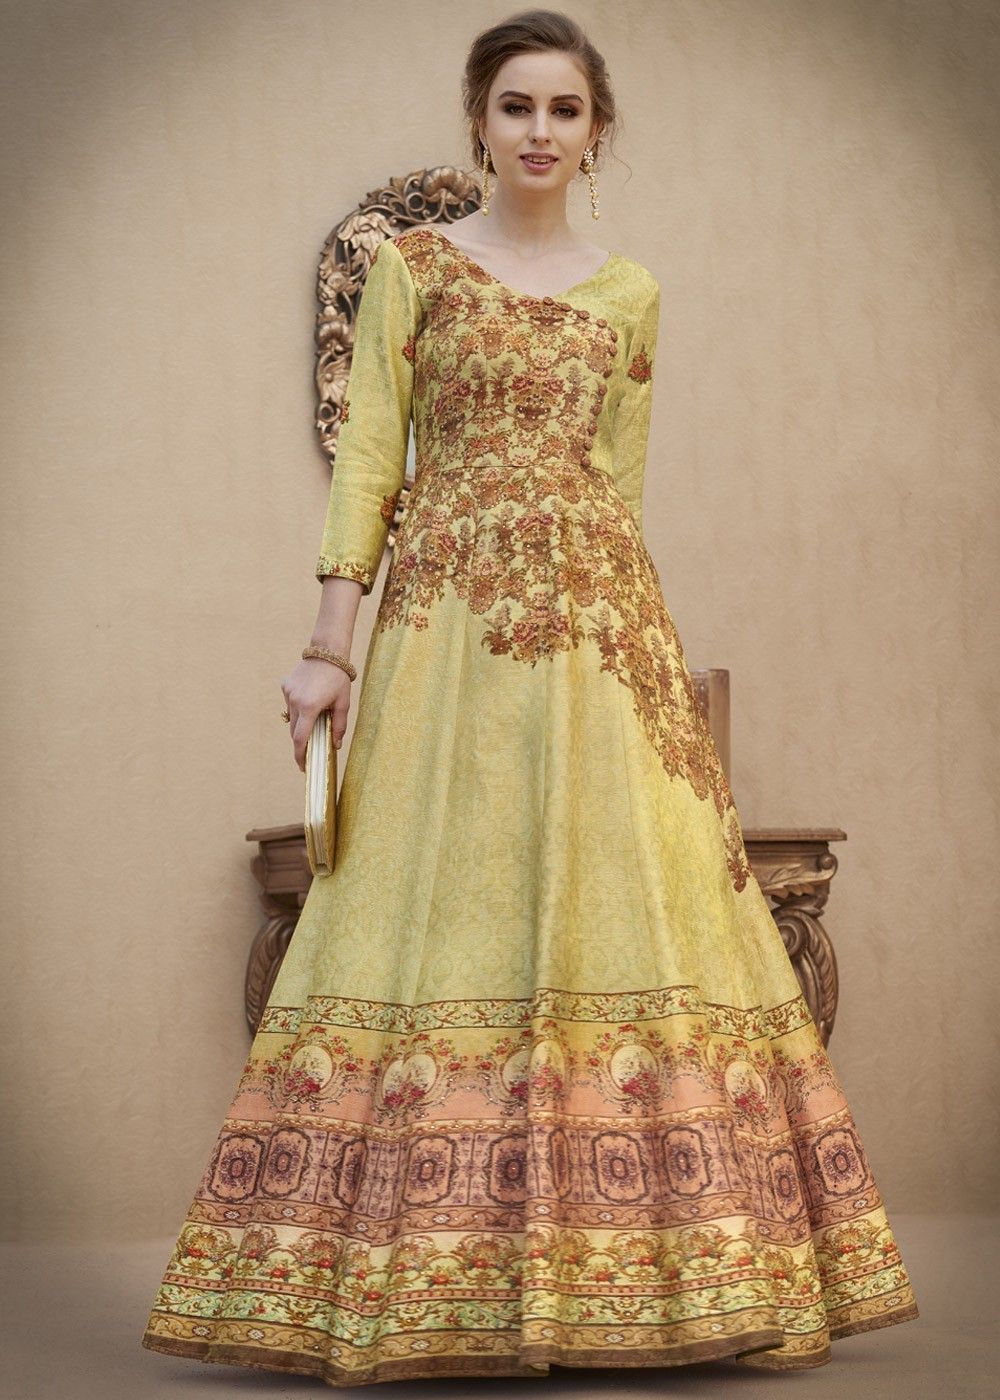 Pretty Girl Dancing Yellow Indian Dress Stock Photo 55250755 | Shutterstock